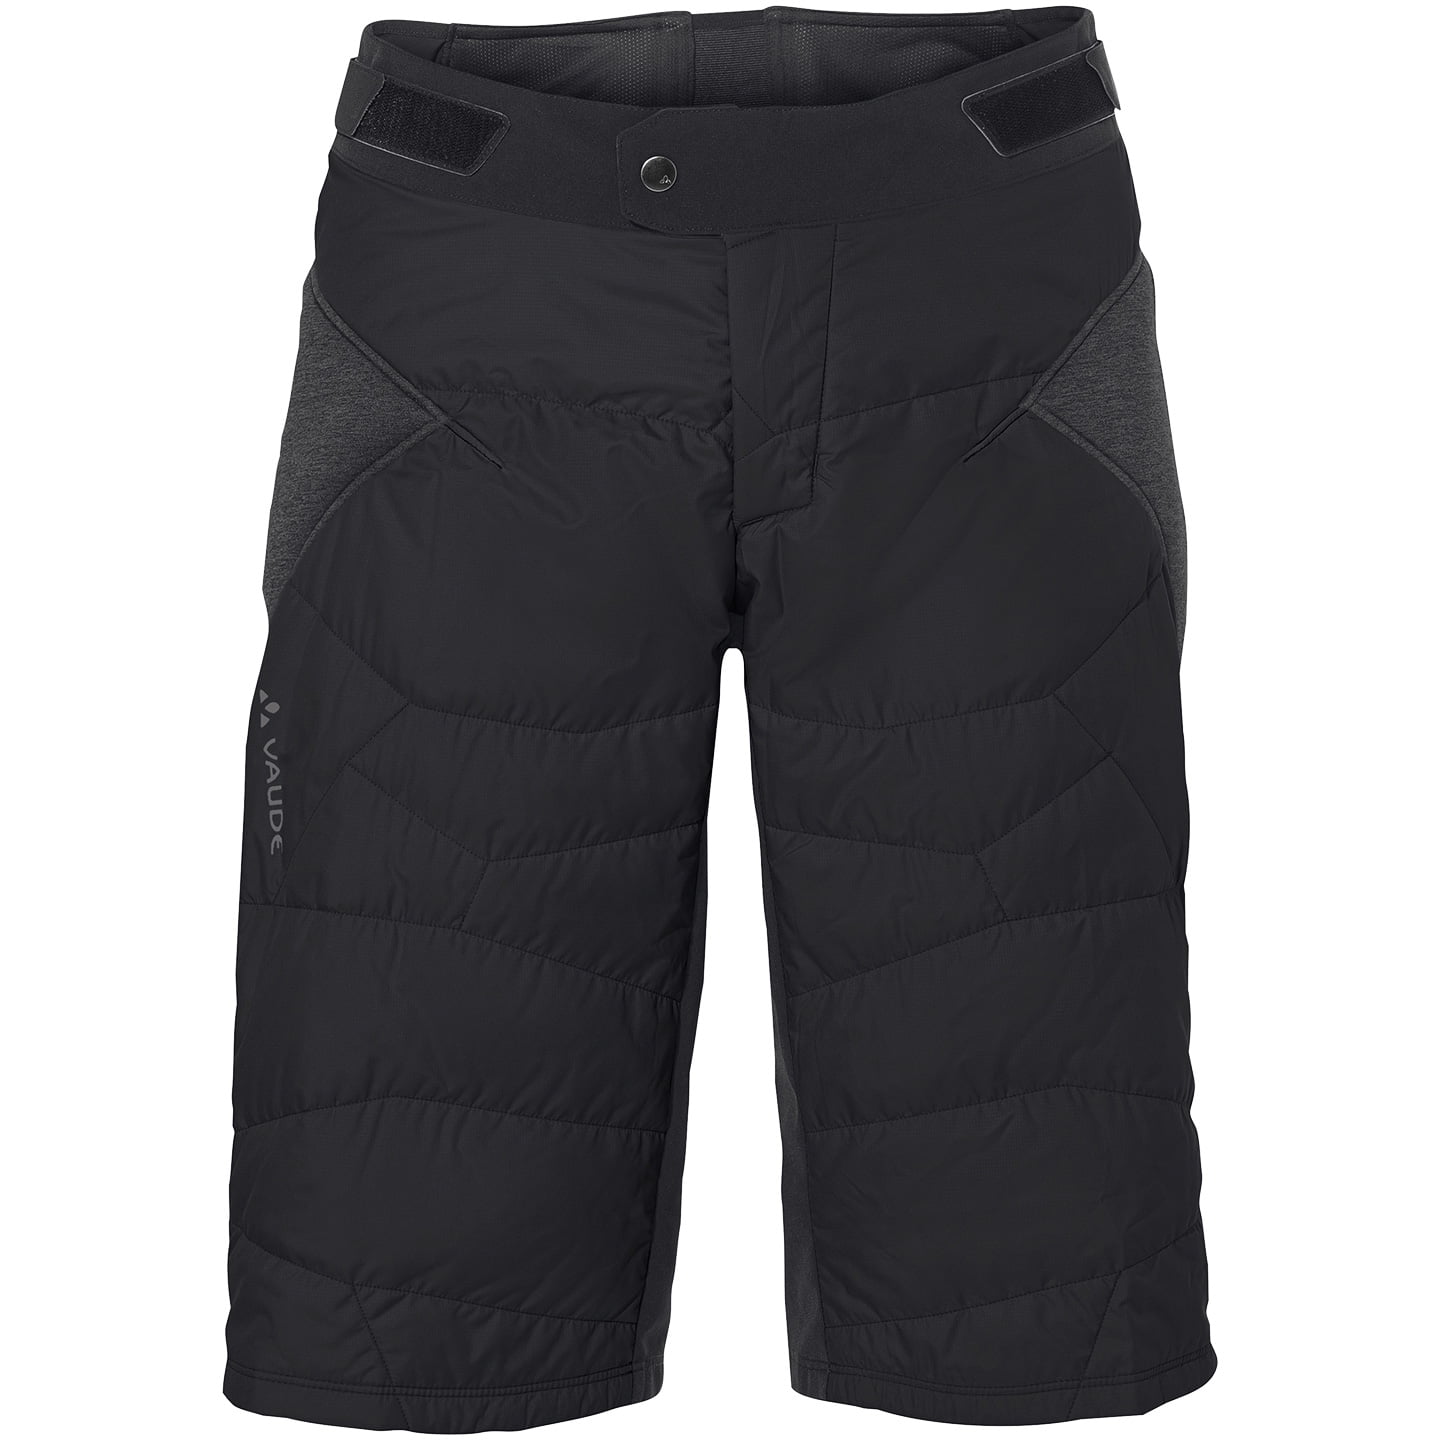 VAUDE Minaki III w/o Pad Bike Shorts, for men, size 2XL, MTB shorts, MTB clothing